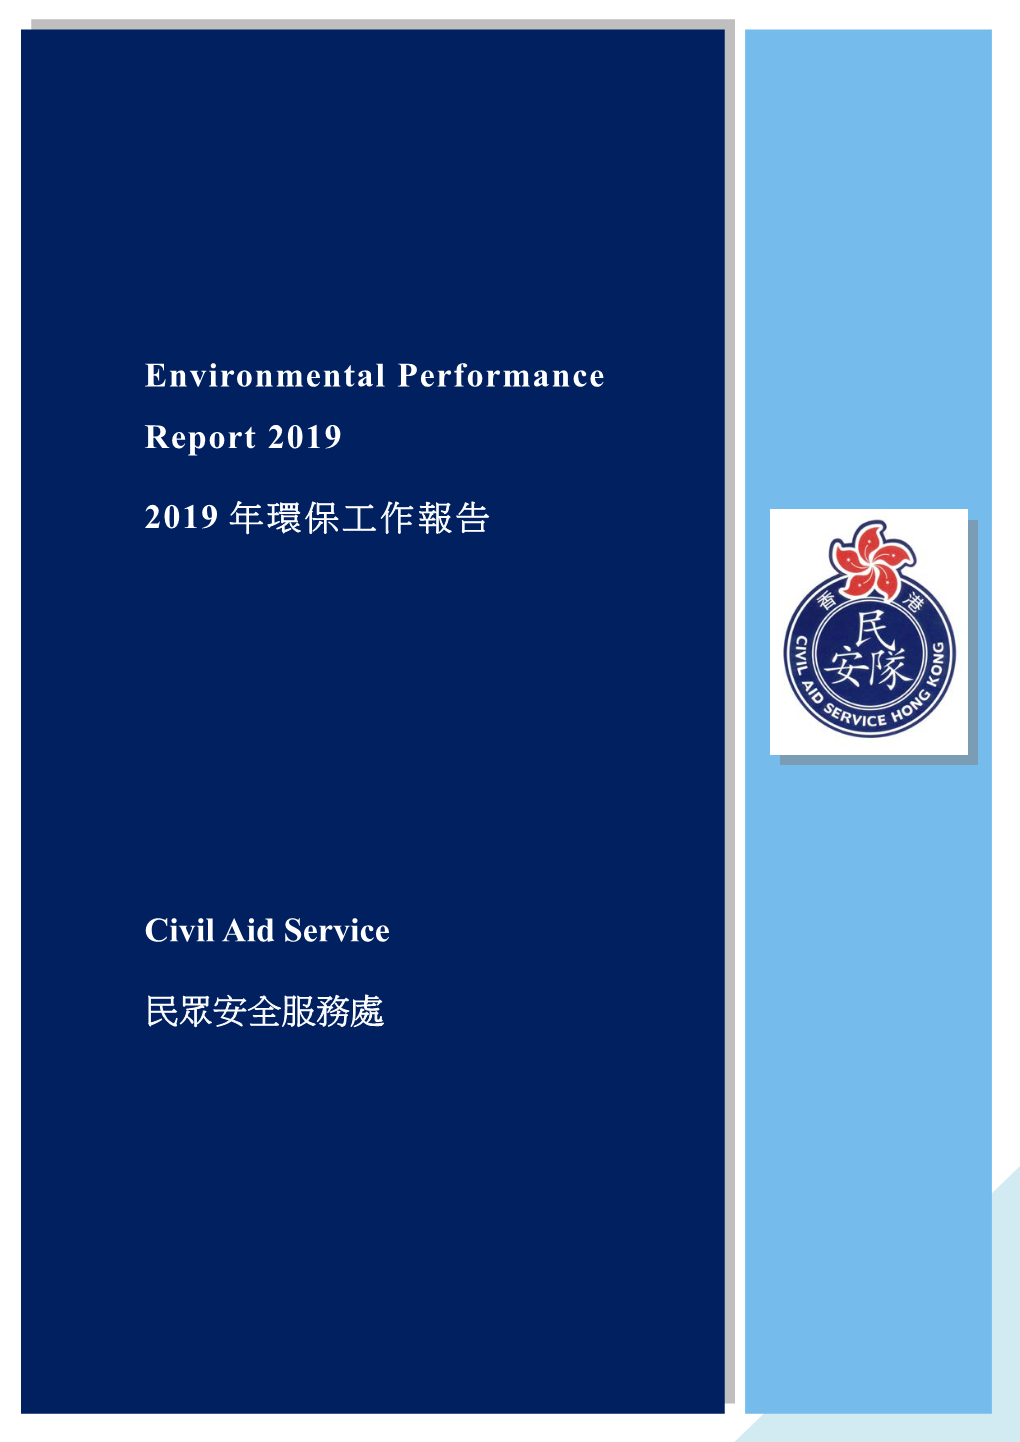 Environmental Performance Report 2019 2019 年環保工作報告 Civil Aid Service 民眾安全服務處